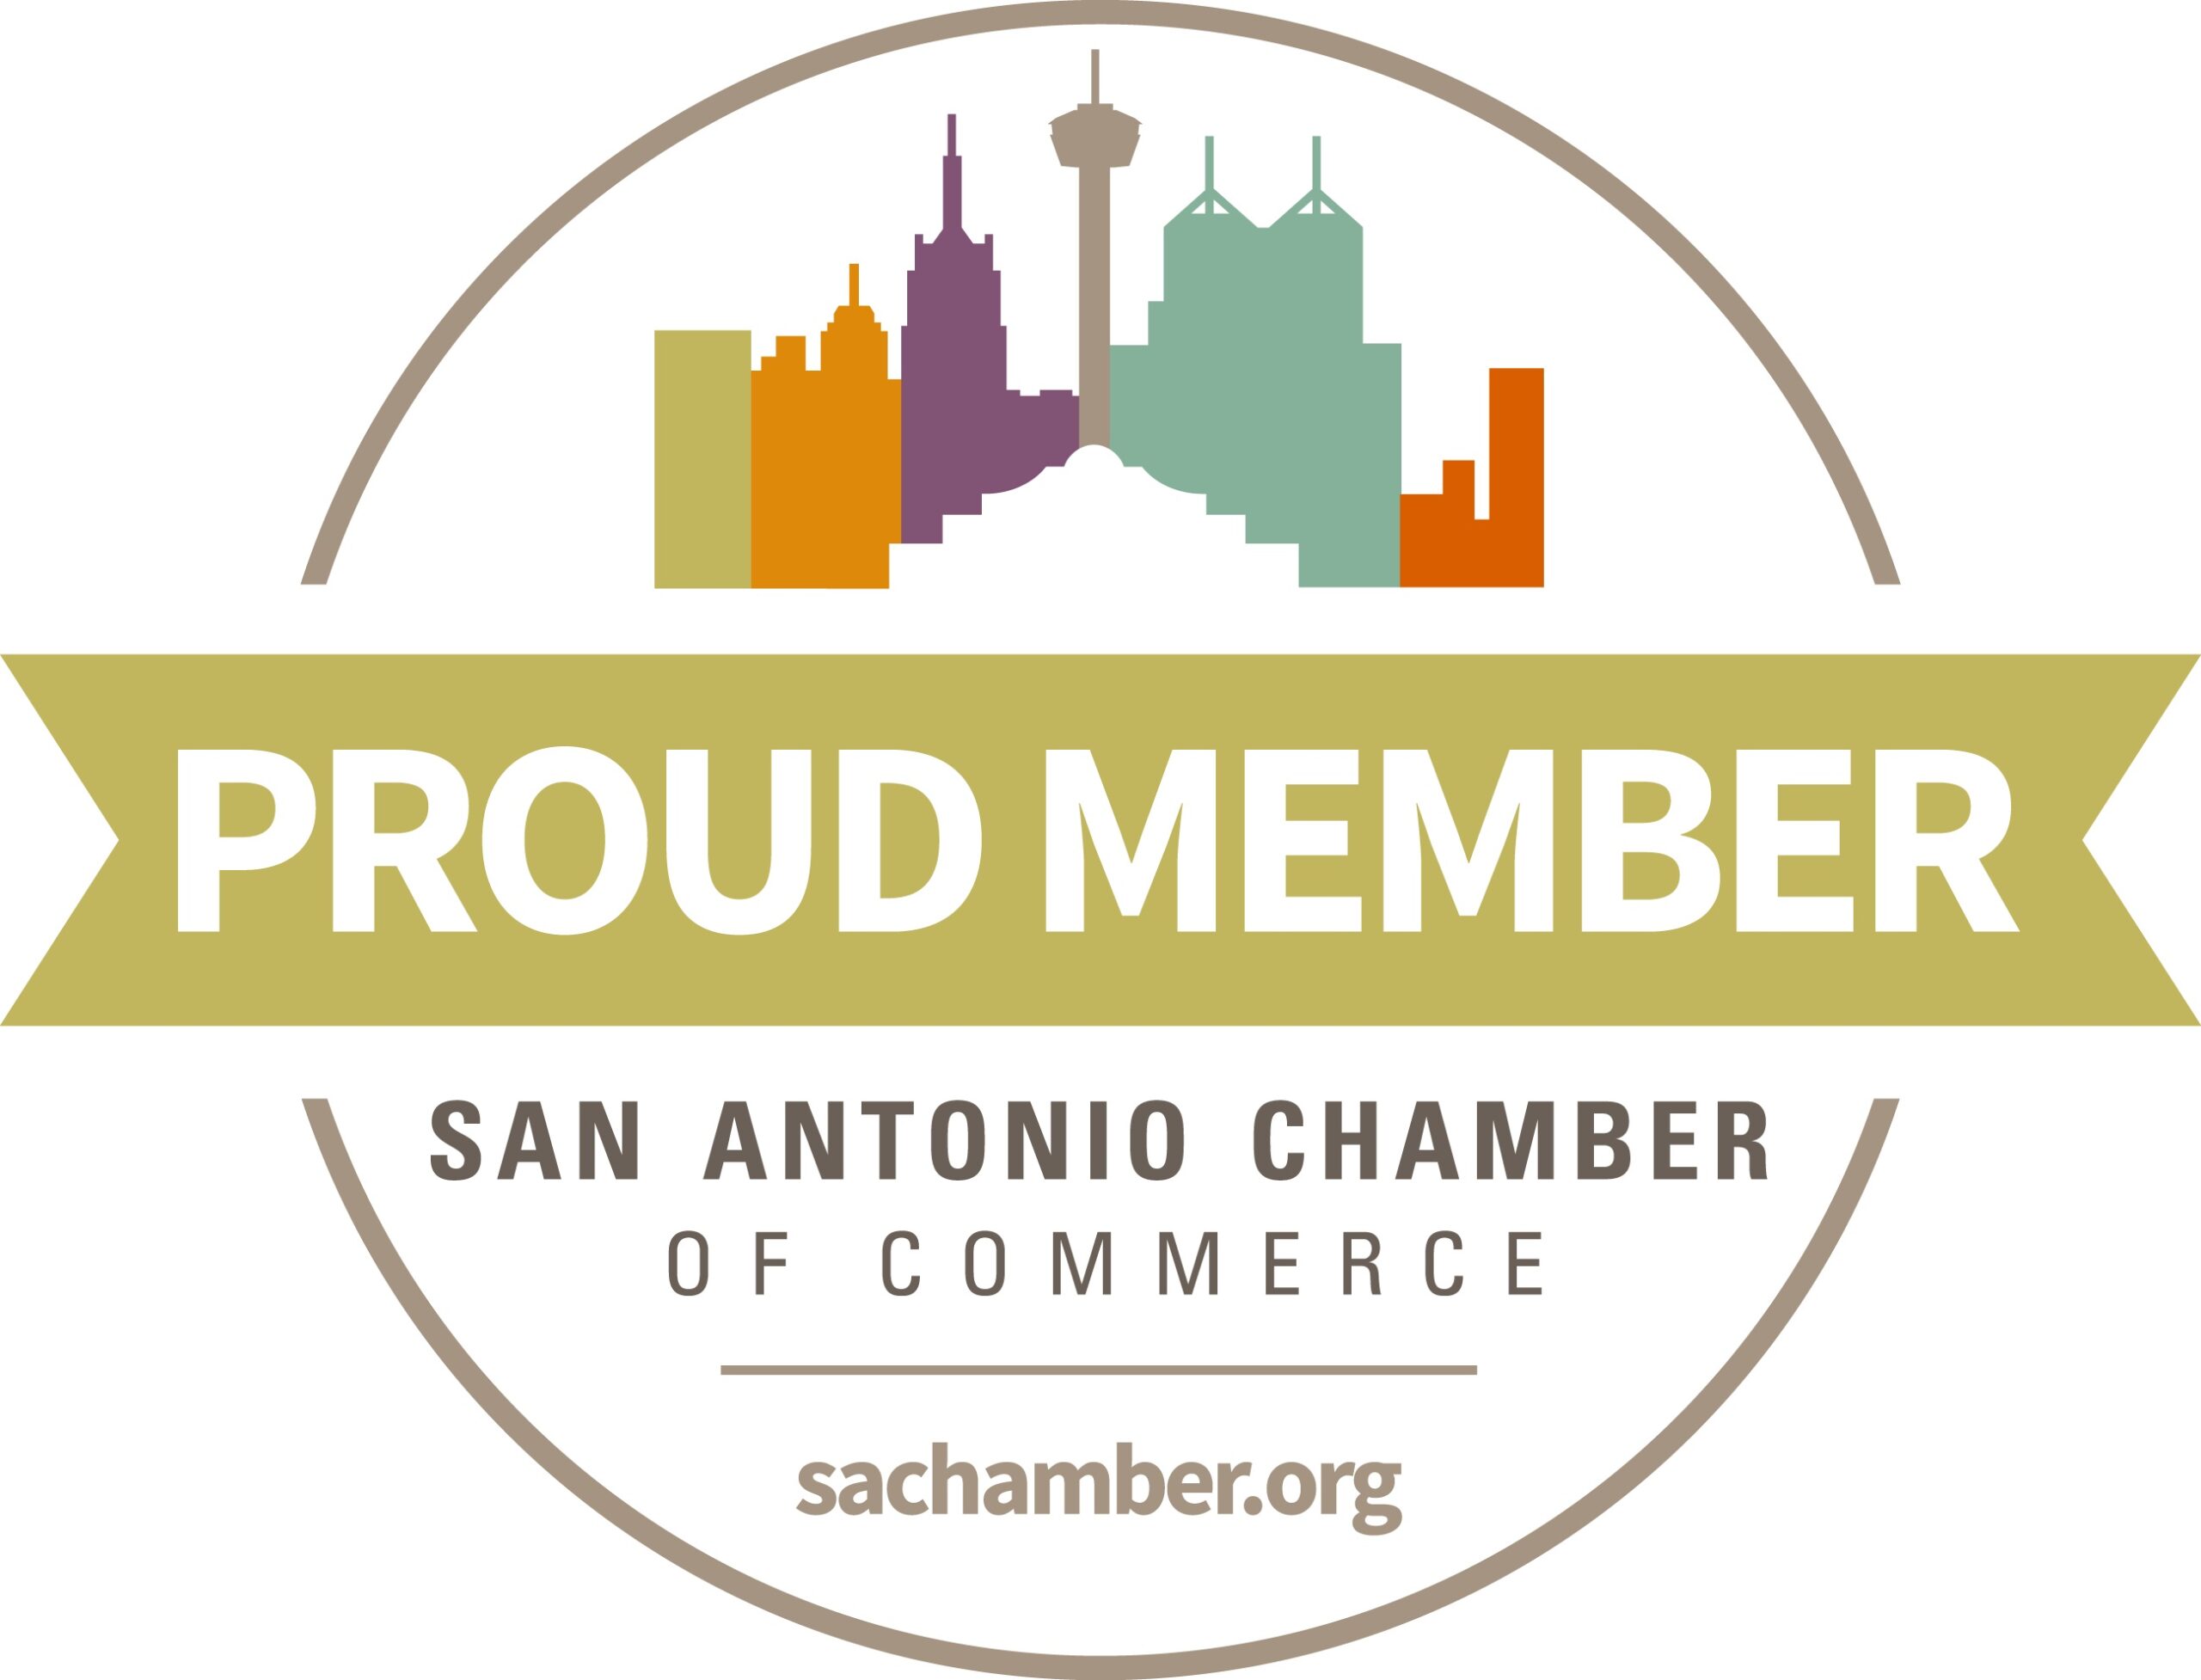 San Antonio Chamber